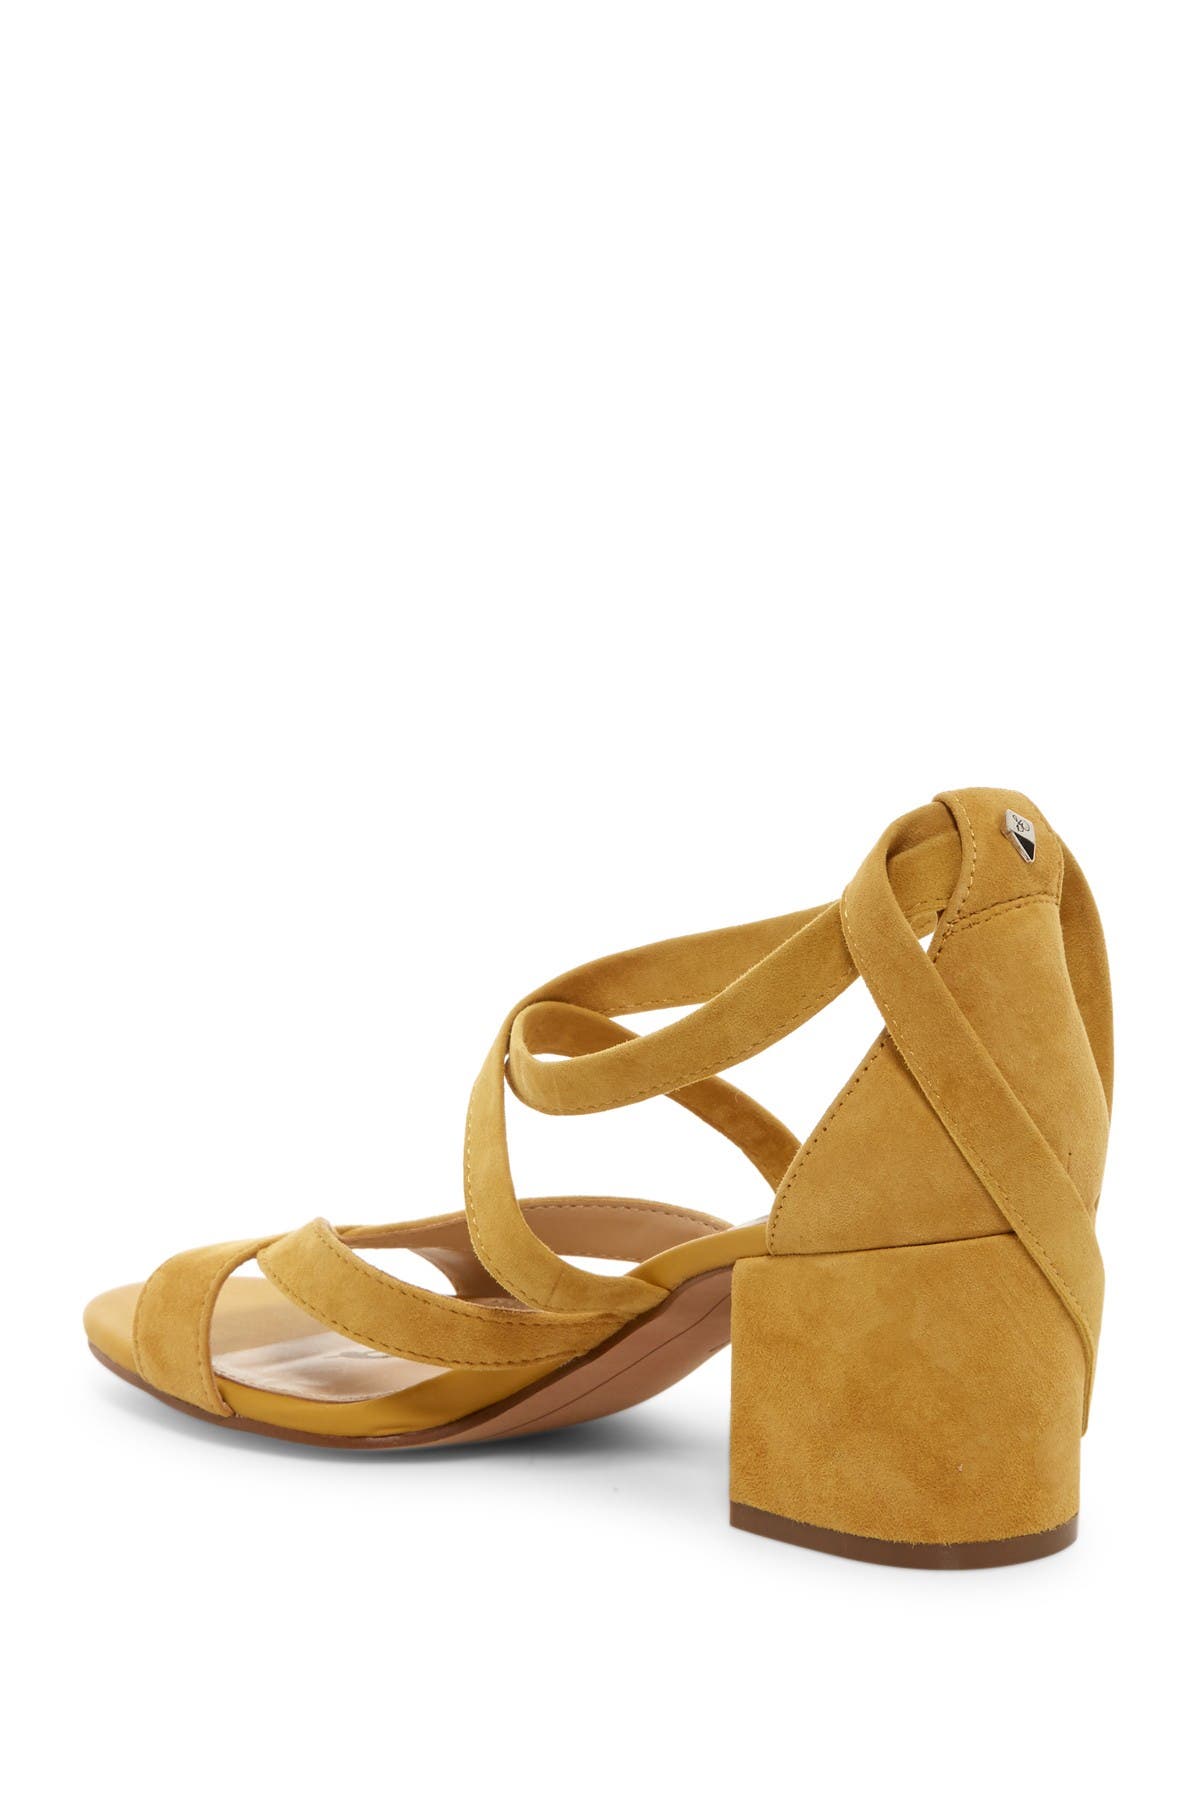 sam edelman women's sheri heeled sandal